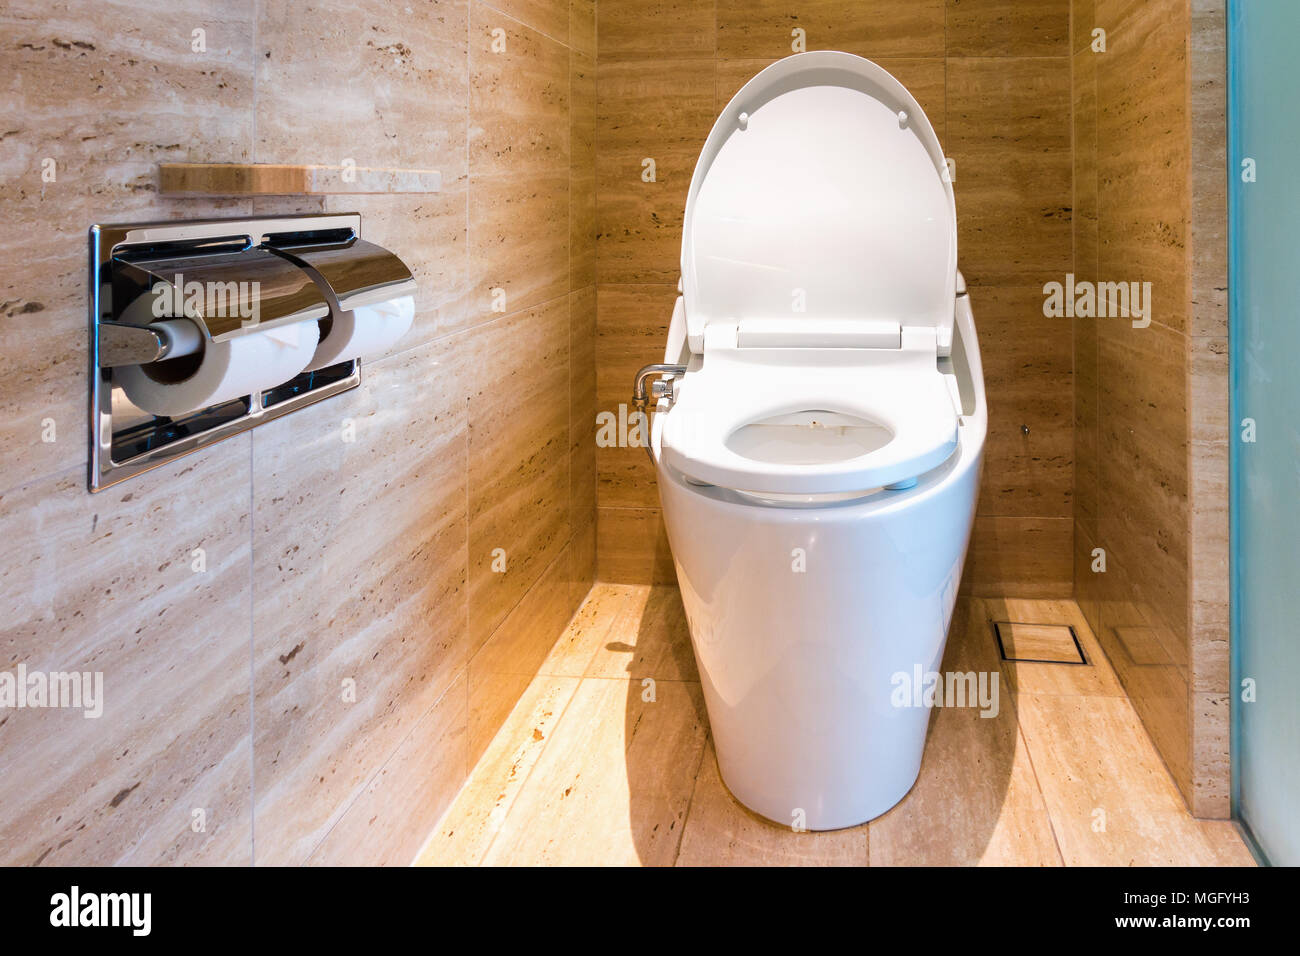 Modern toilet seat and interior decoration., Architecture interior. Stock Photo